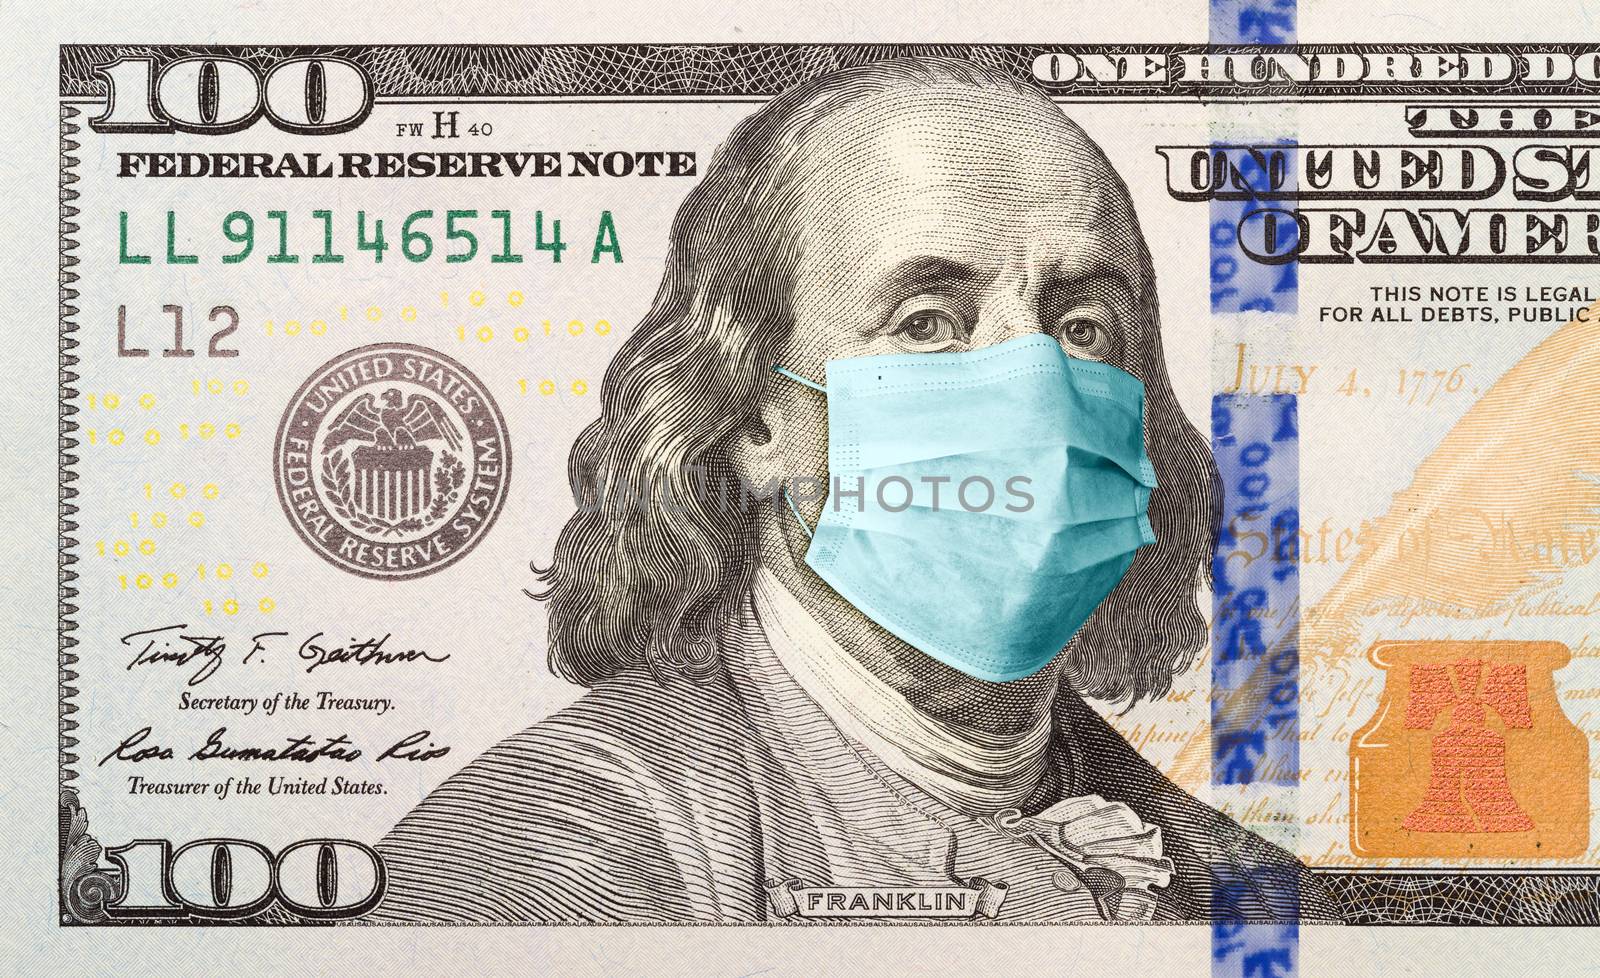 One Hundred Dollar Bill With Medical Face Mask on Benjamin Franklin.